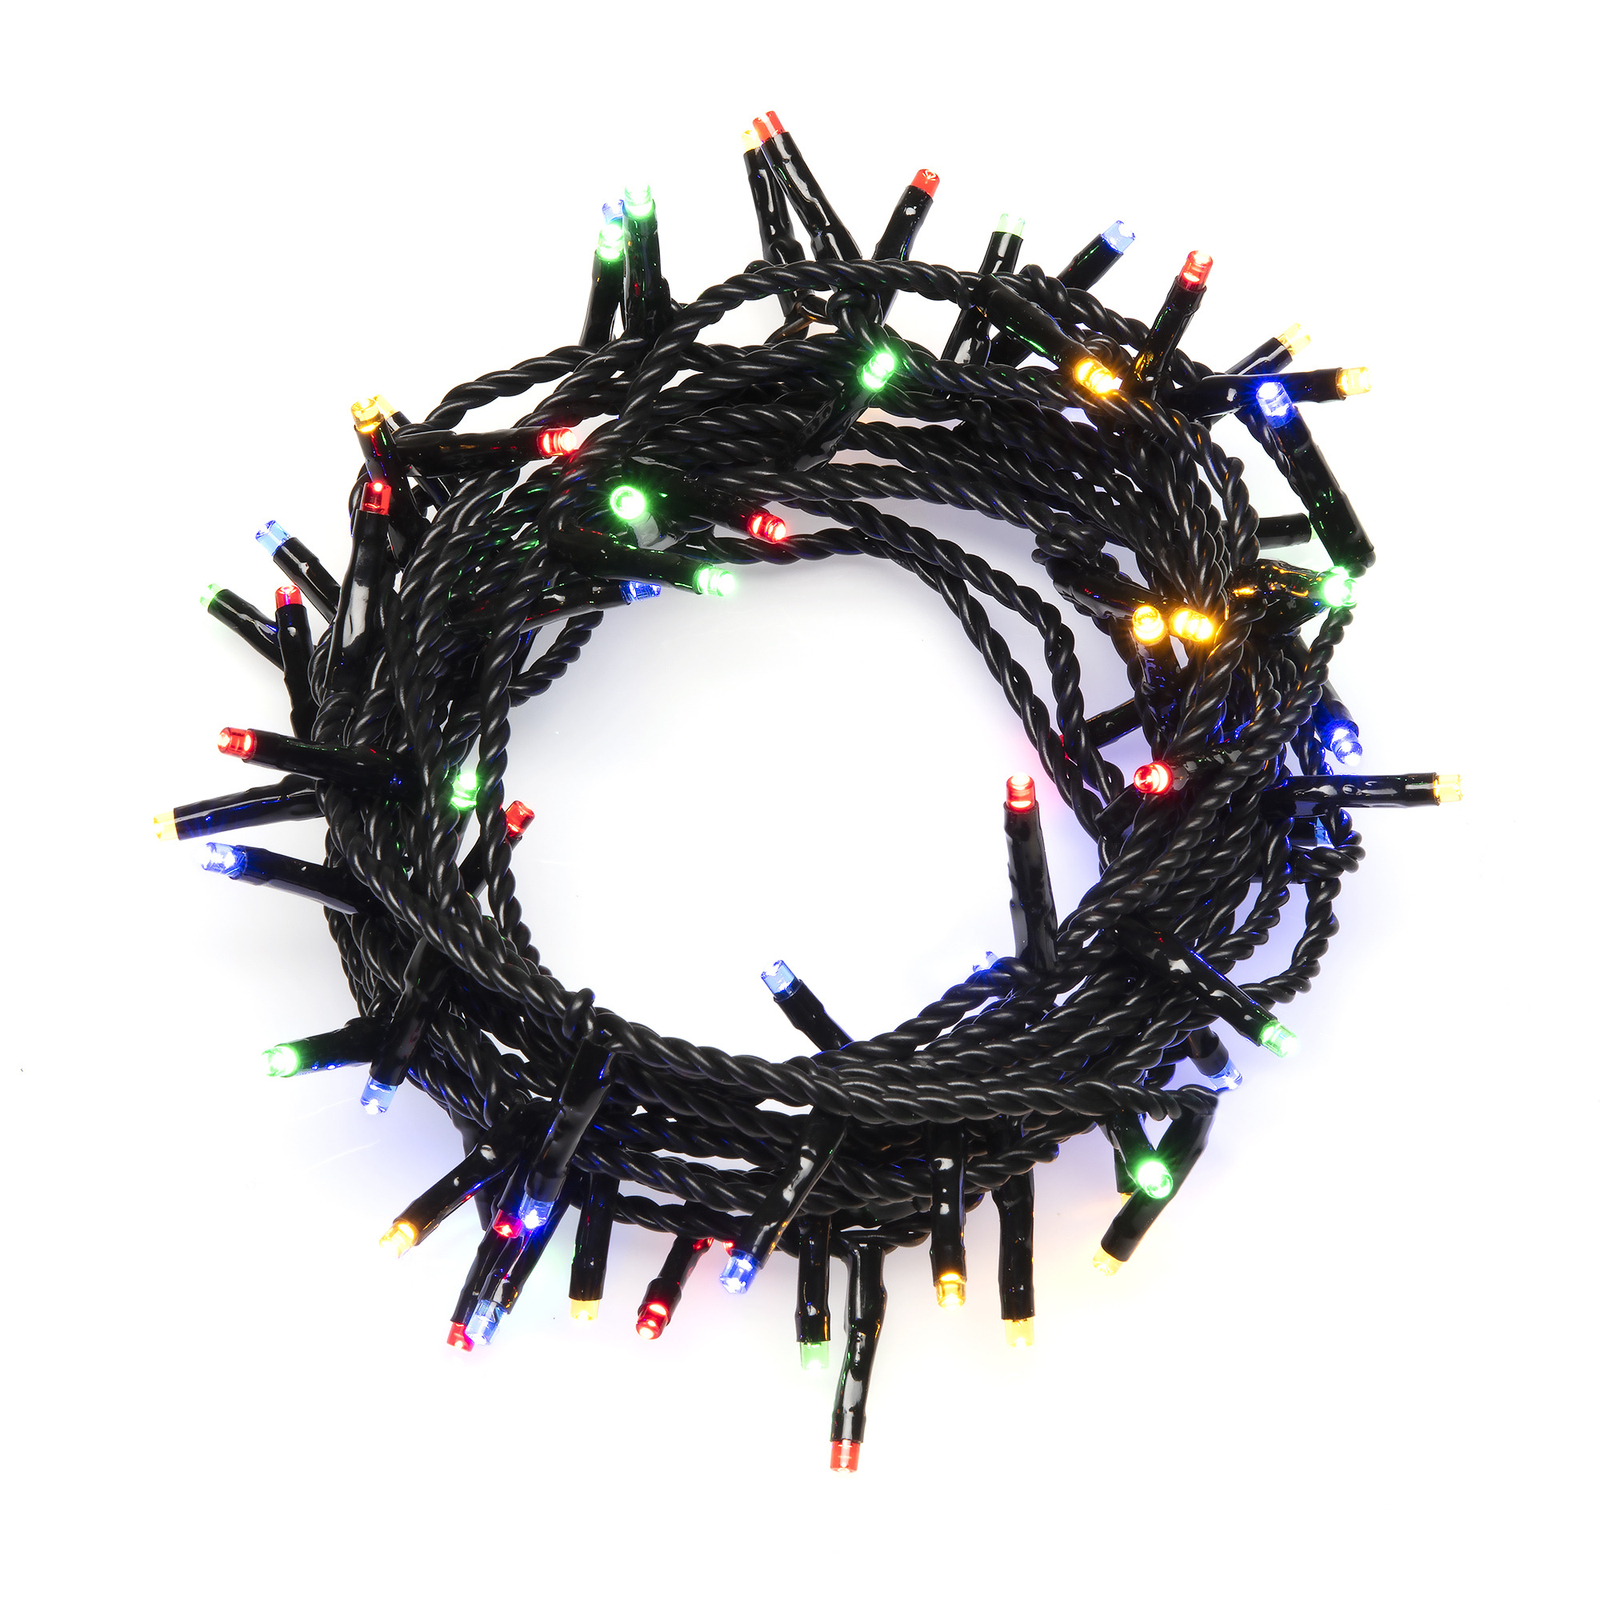 Micro-chaîne lumineuse LED multicolore à 180 flammes